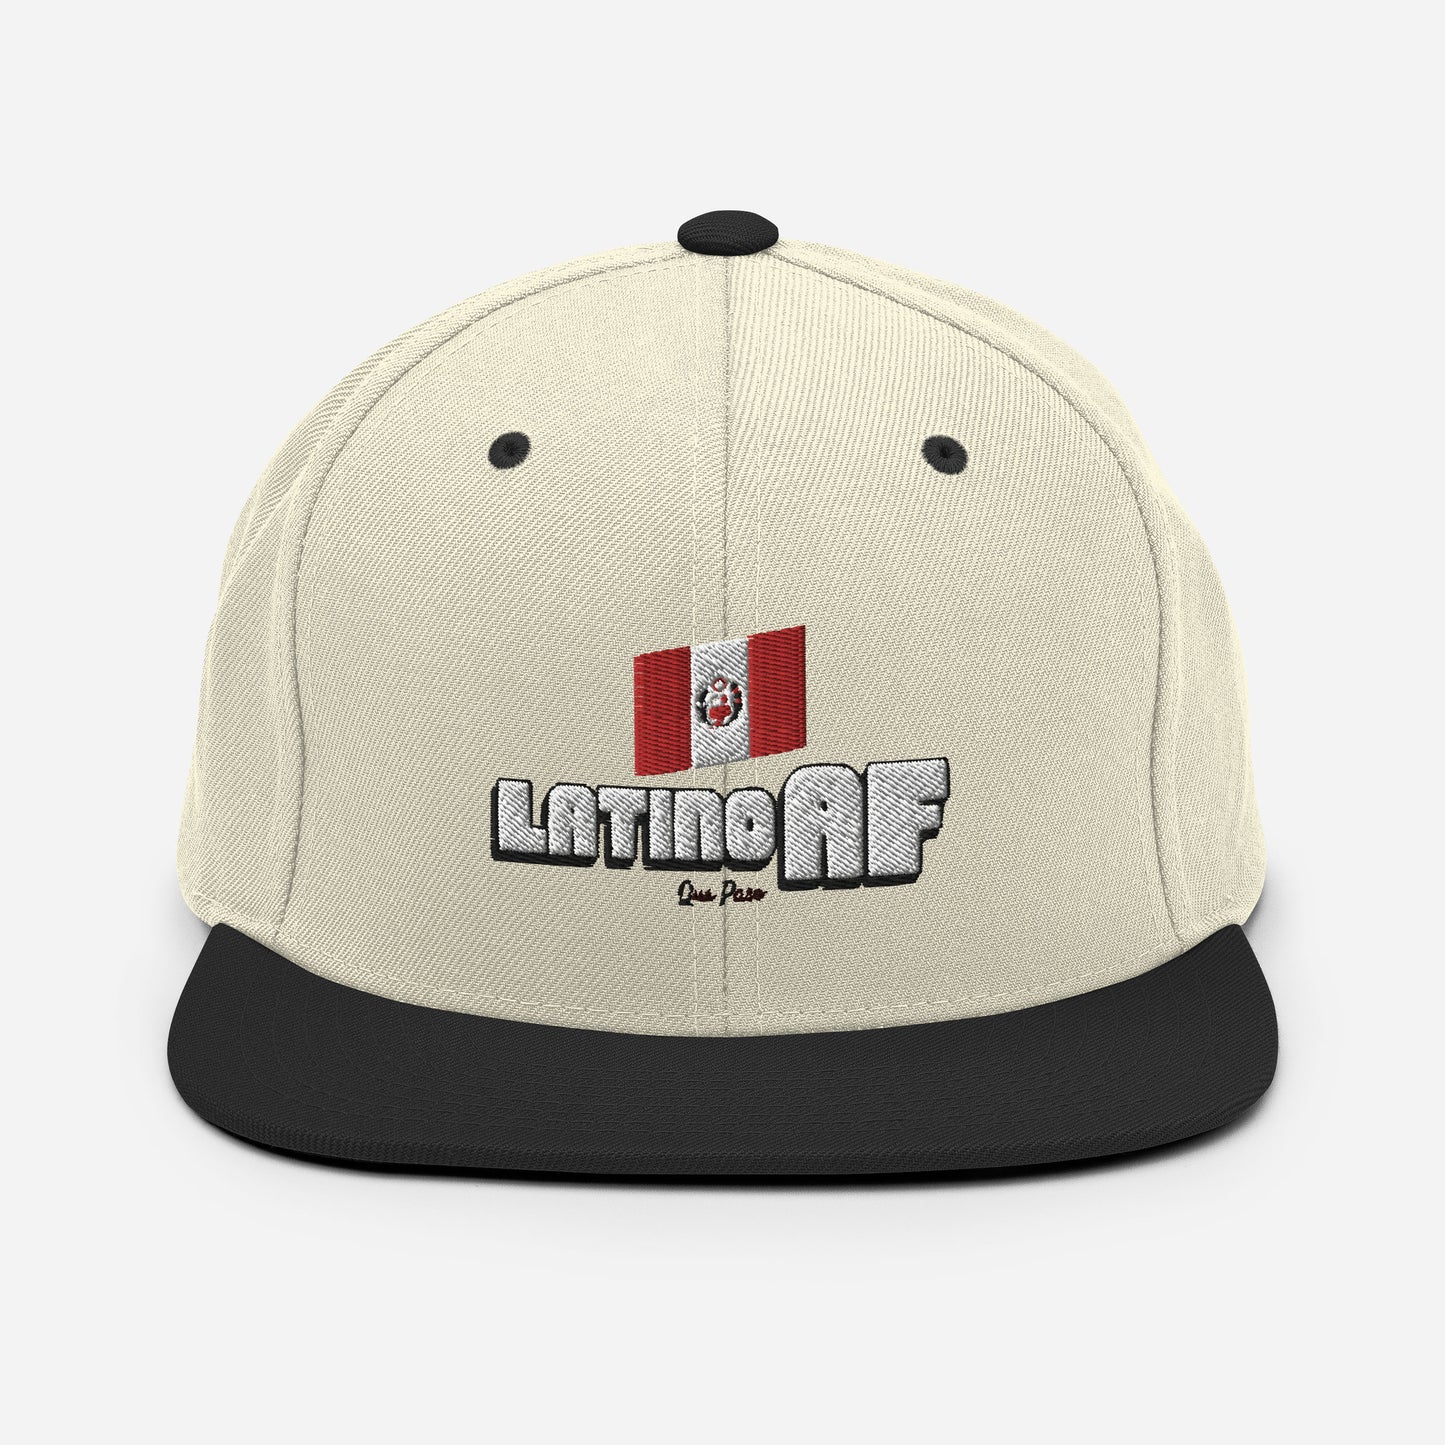 Latino AF Peru Snapback Hat